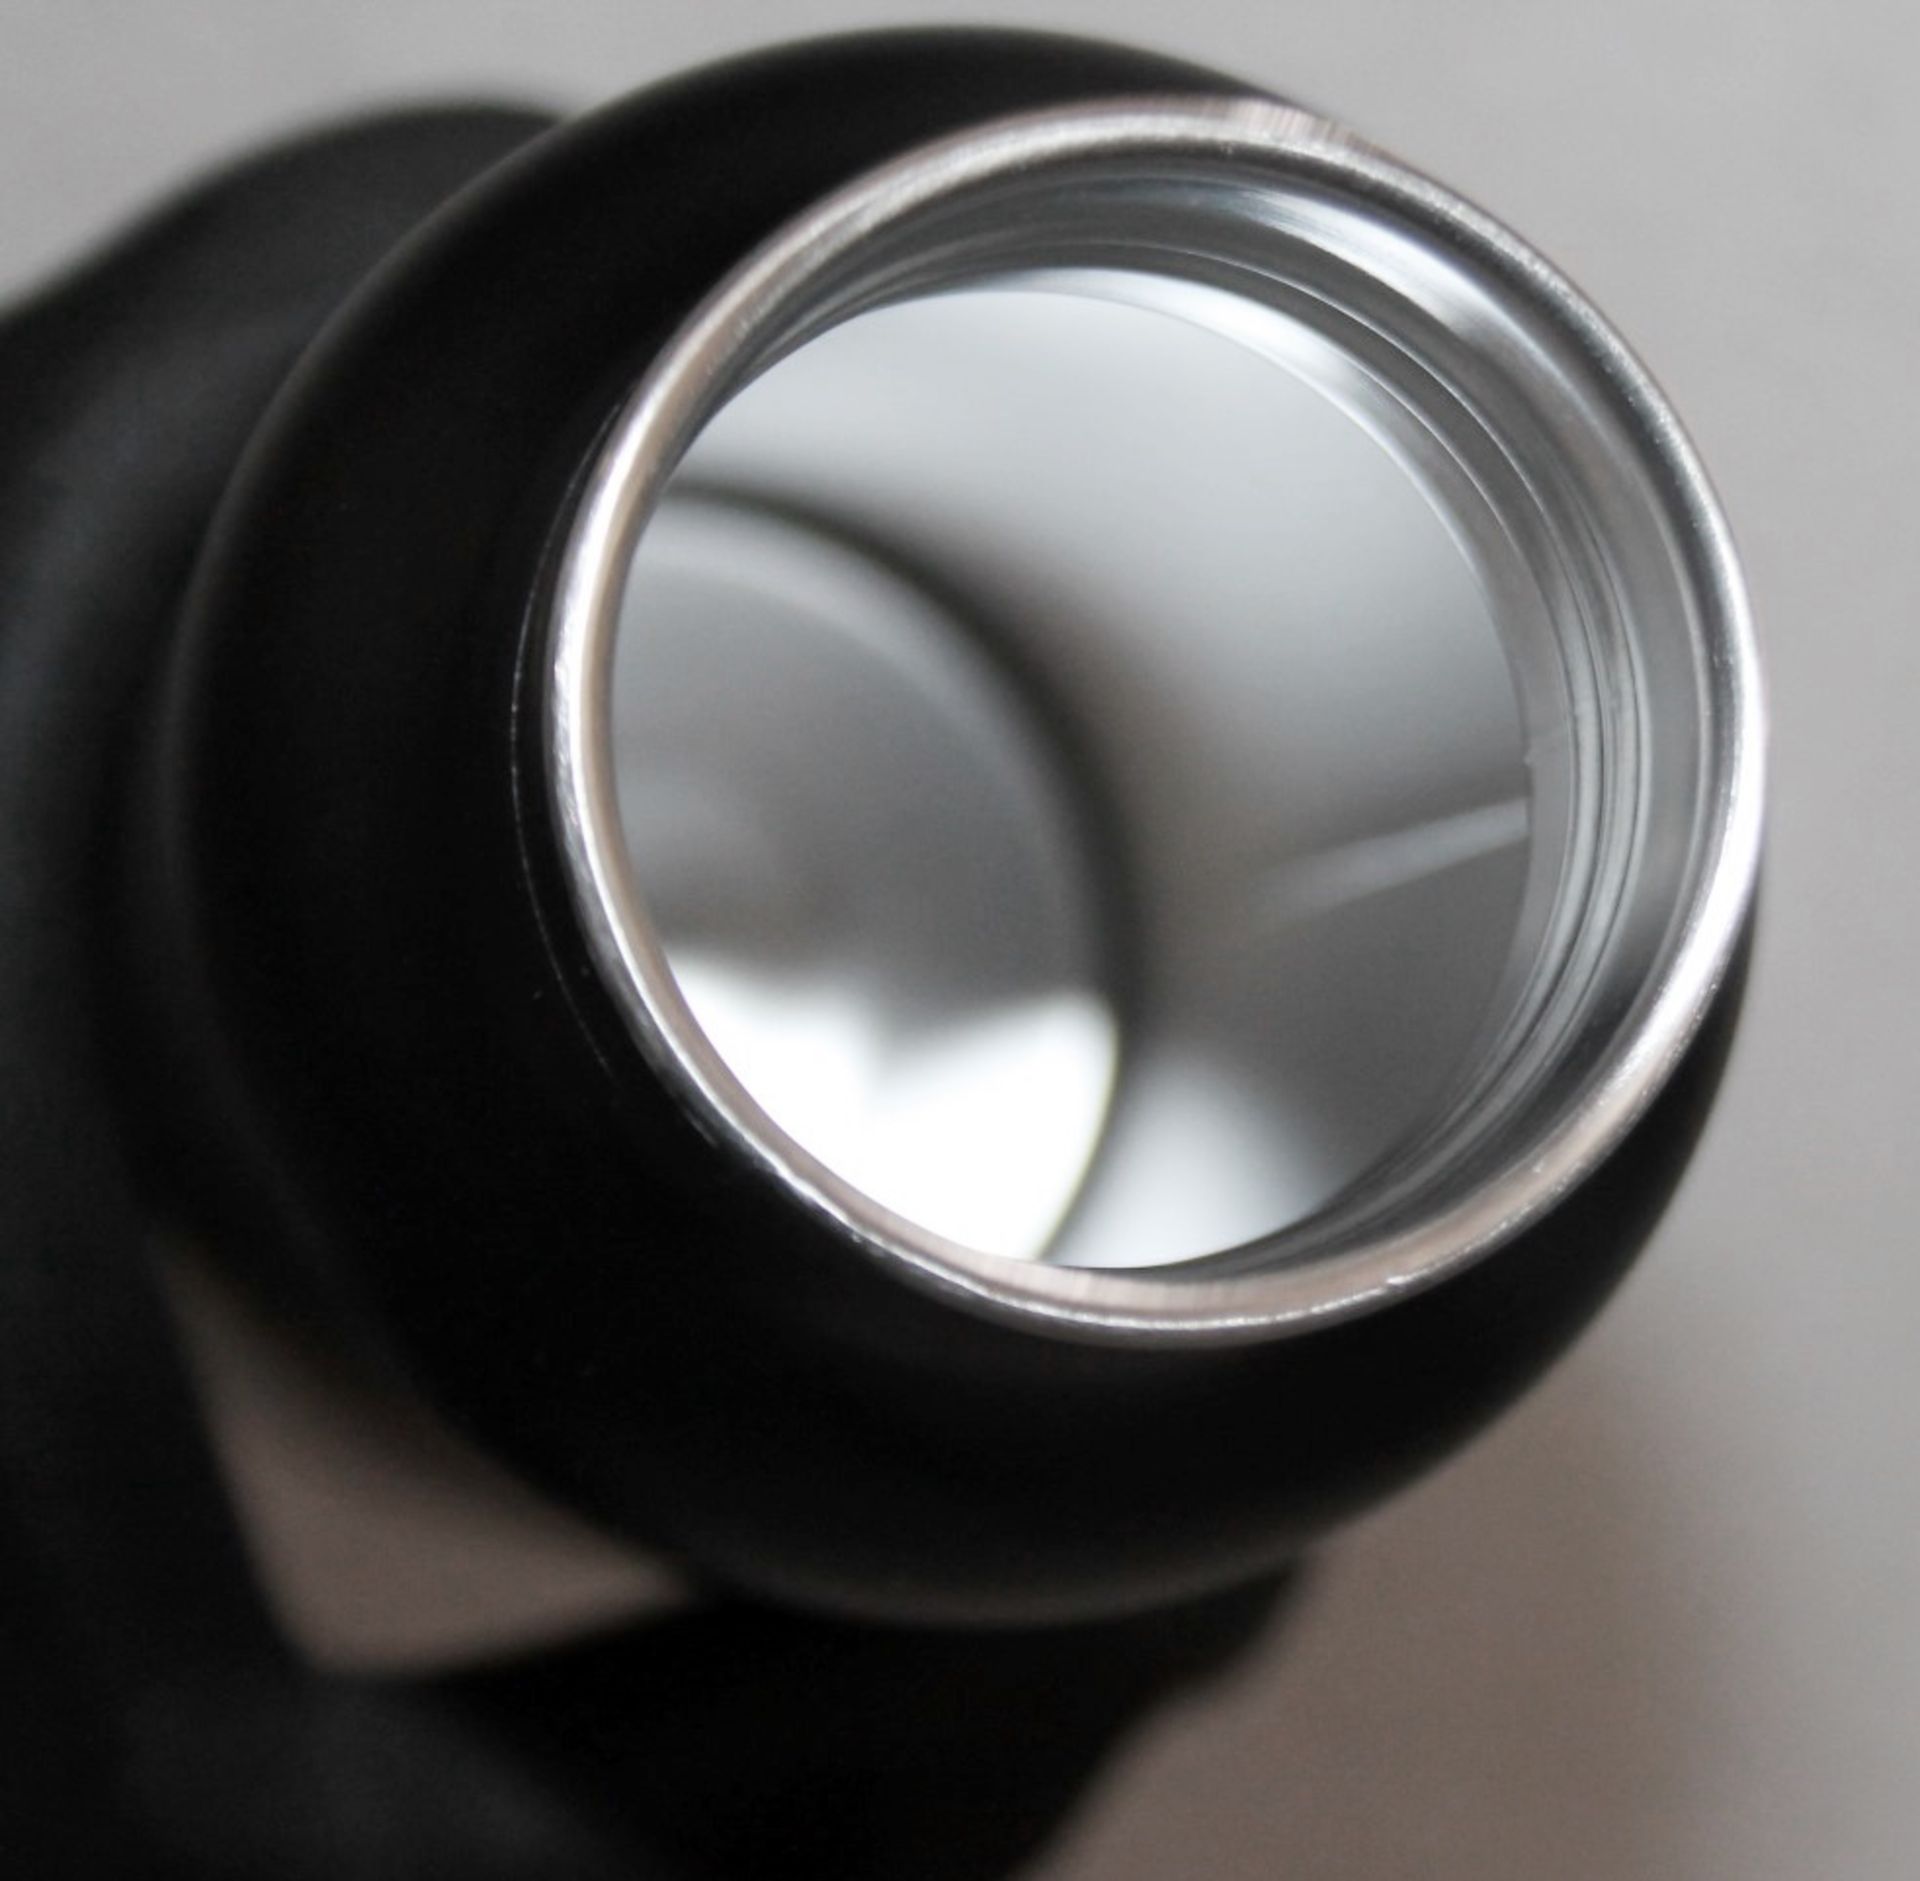 1 x PRADA Stainless Steel Water Bottle In Black, 500 ml - Original Price £100.00 - Image 2 of 8